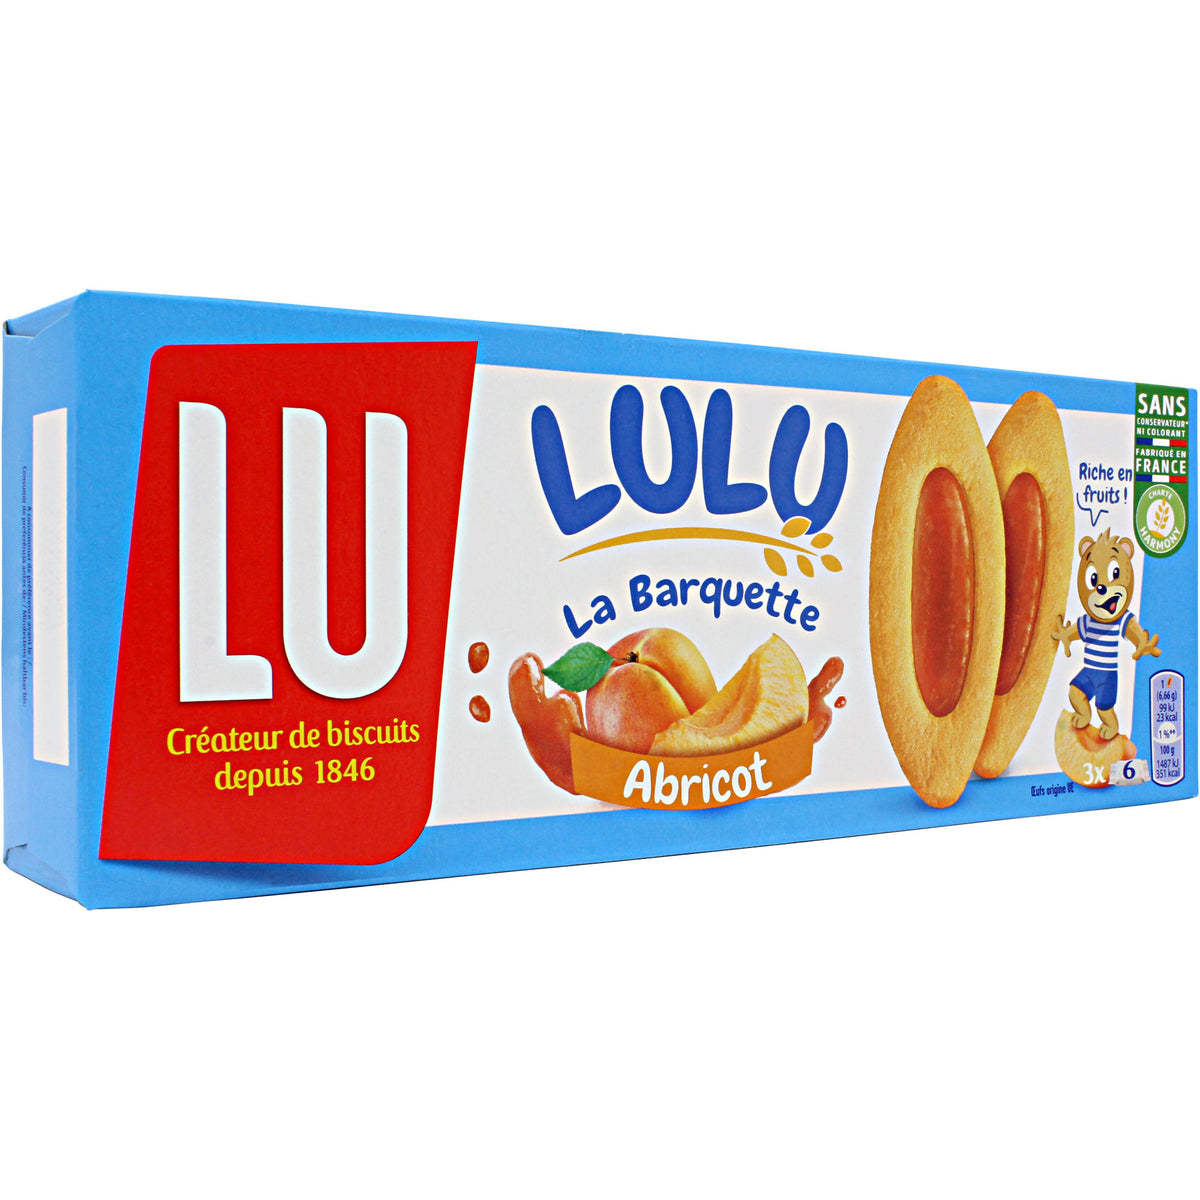 LU Lulu La Barquette (Cookies with Apricot Jam) - 4.2 oz / 120 g